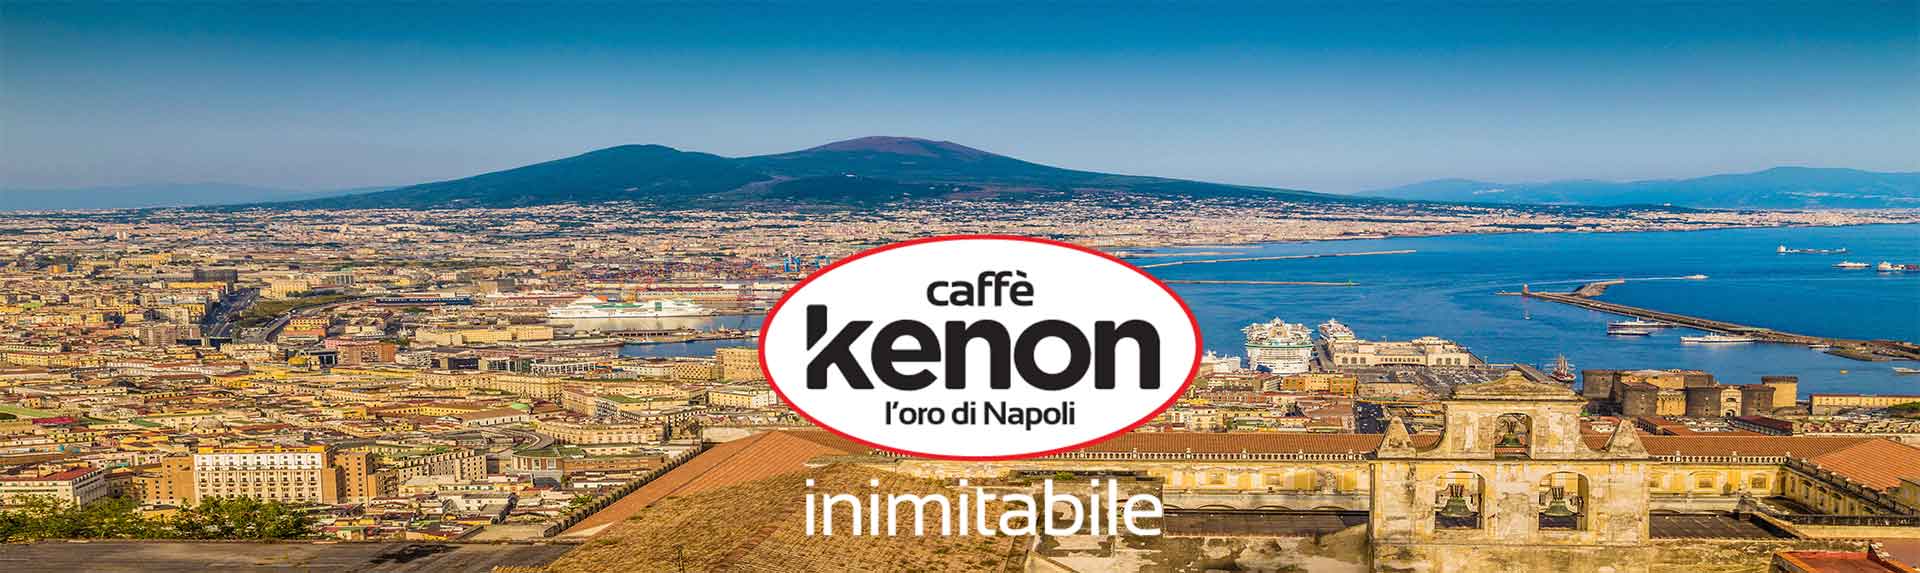 Kenon-Coffee-Gretal-Italian-Export